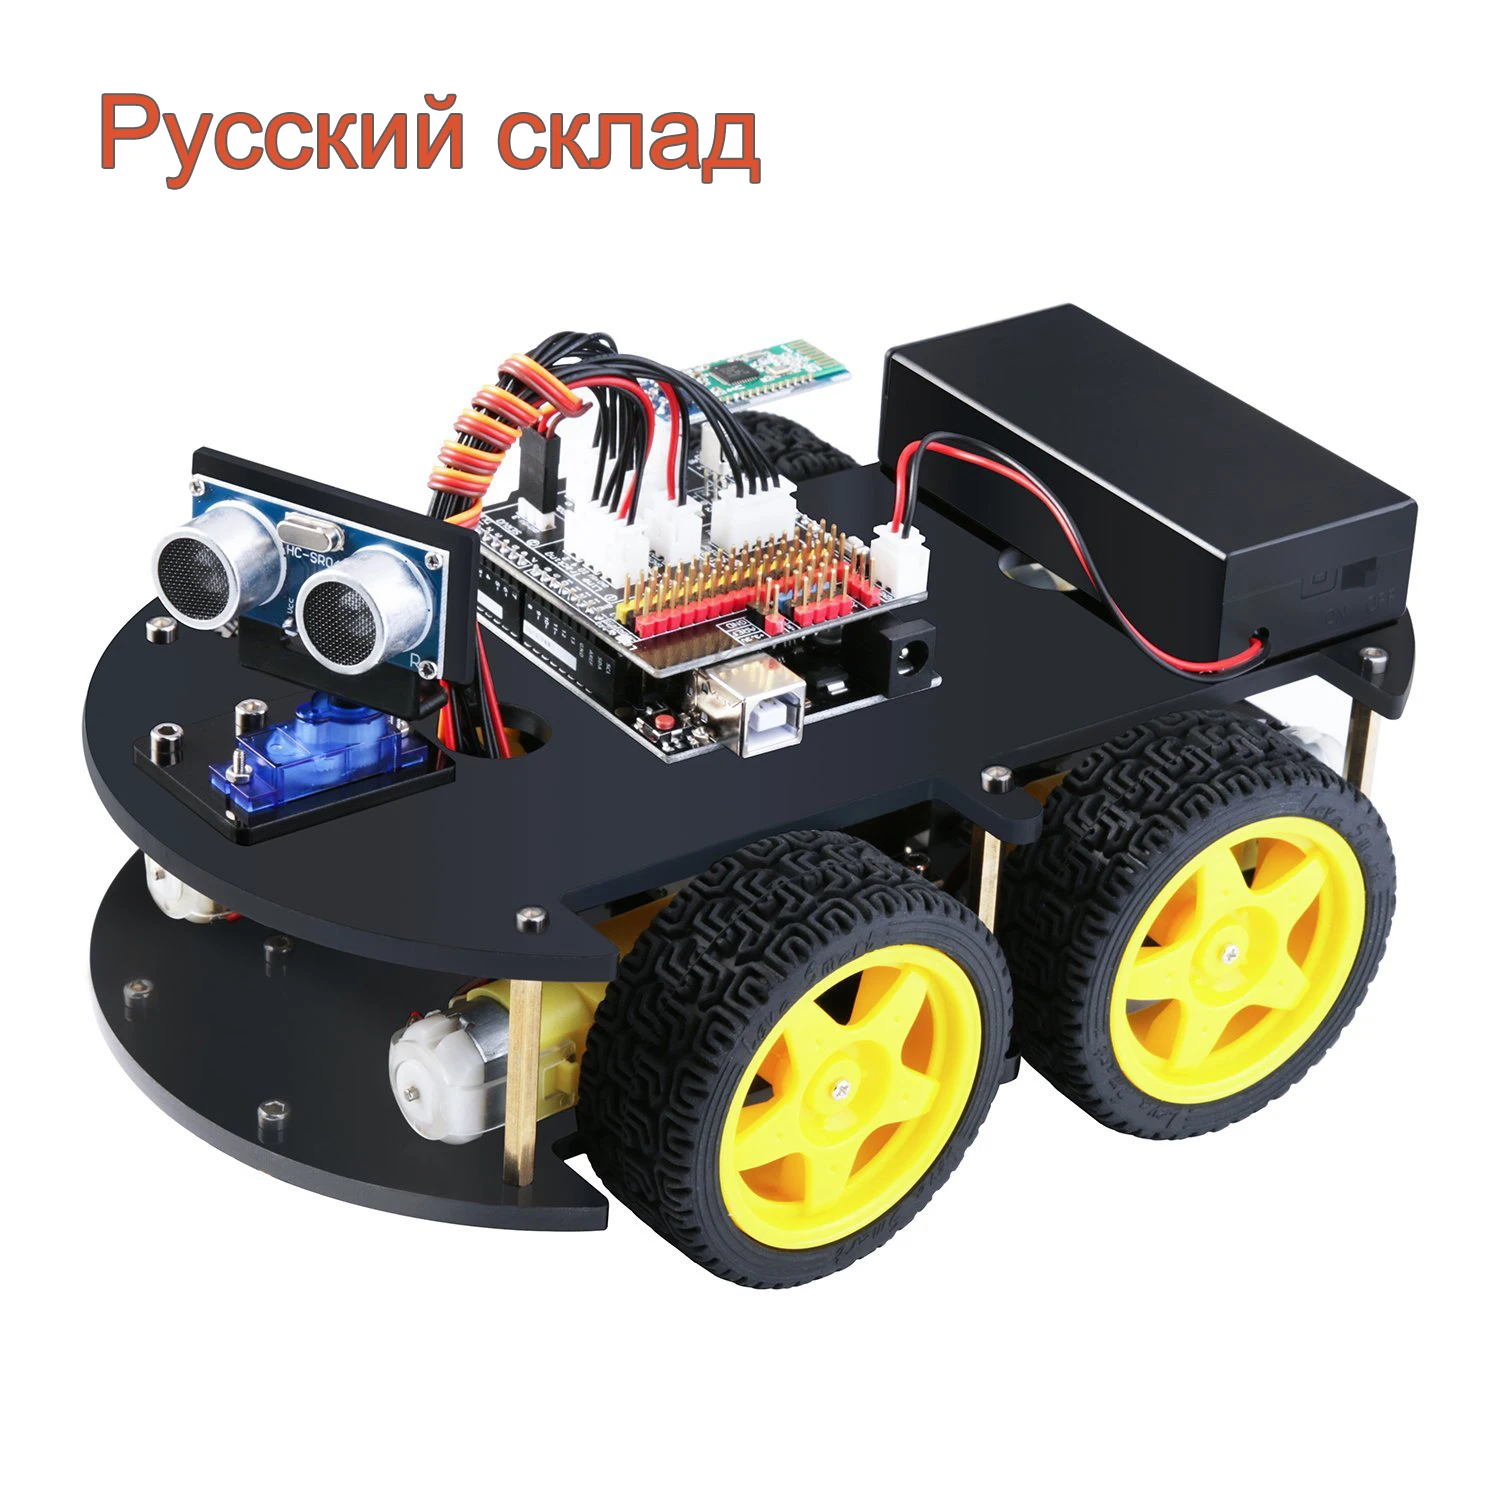 EL-KIT-012 Project Smart Robot Car Kit V 3.0 with Arduino un R3, Line  Tracking, Ultrasonic Sensor, Bluetooth for arduino program _ - AliExpress  Mobile